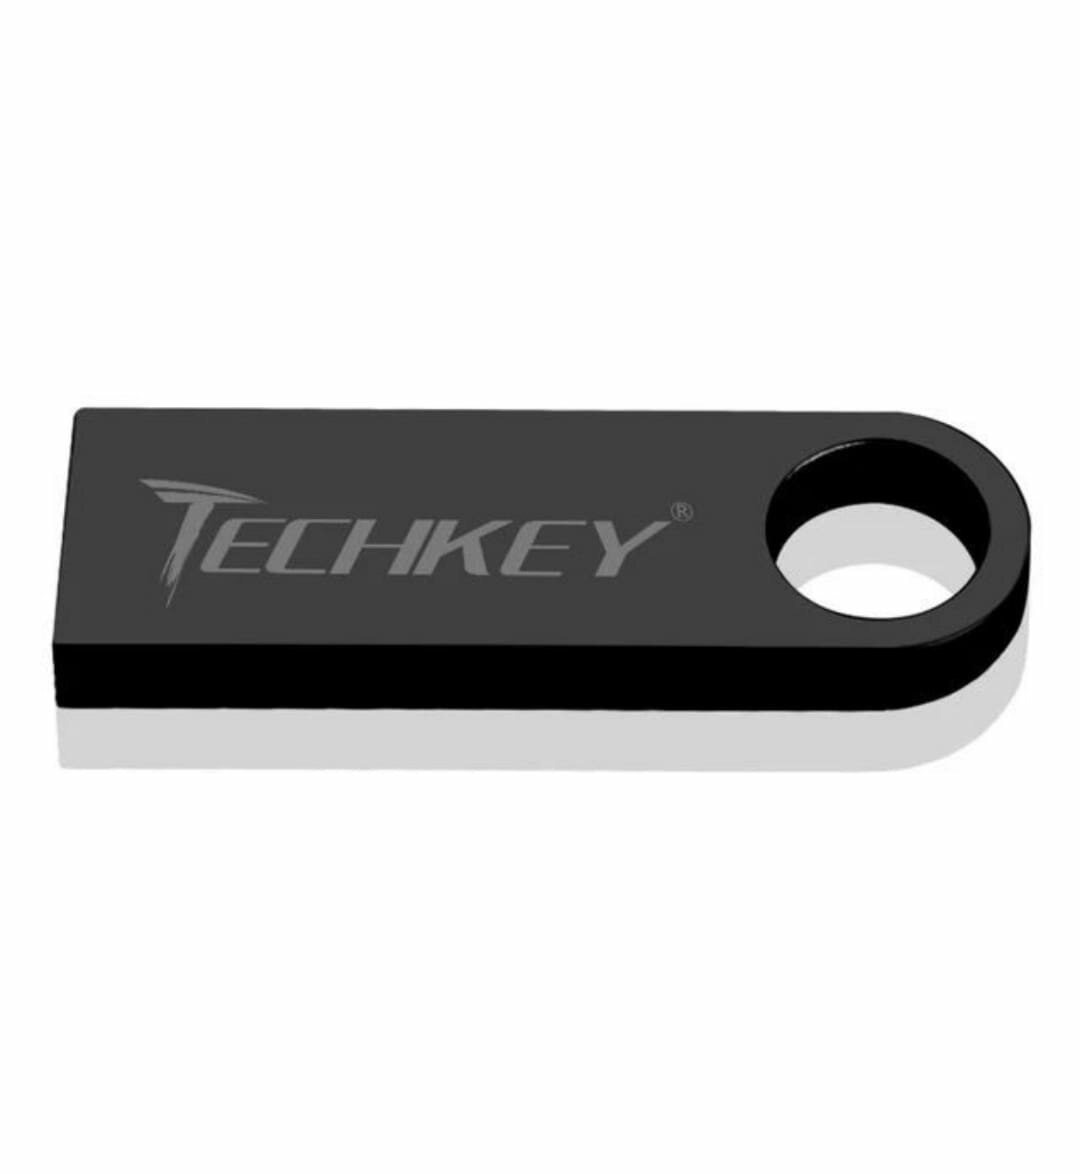 USB-флеш-накопитель TECHKEY, водонепроницаемый USB флеш-накопитель 32 ГБ, черный